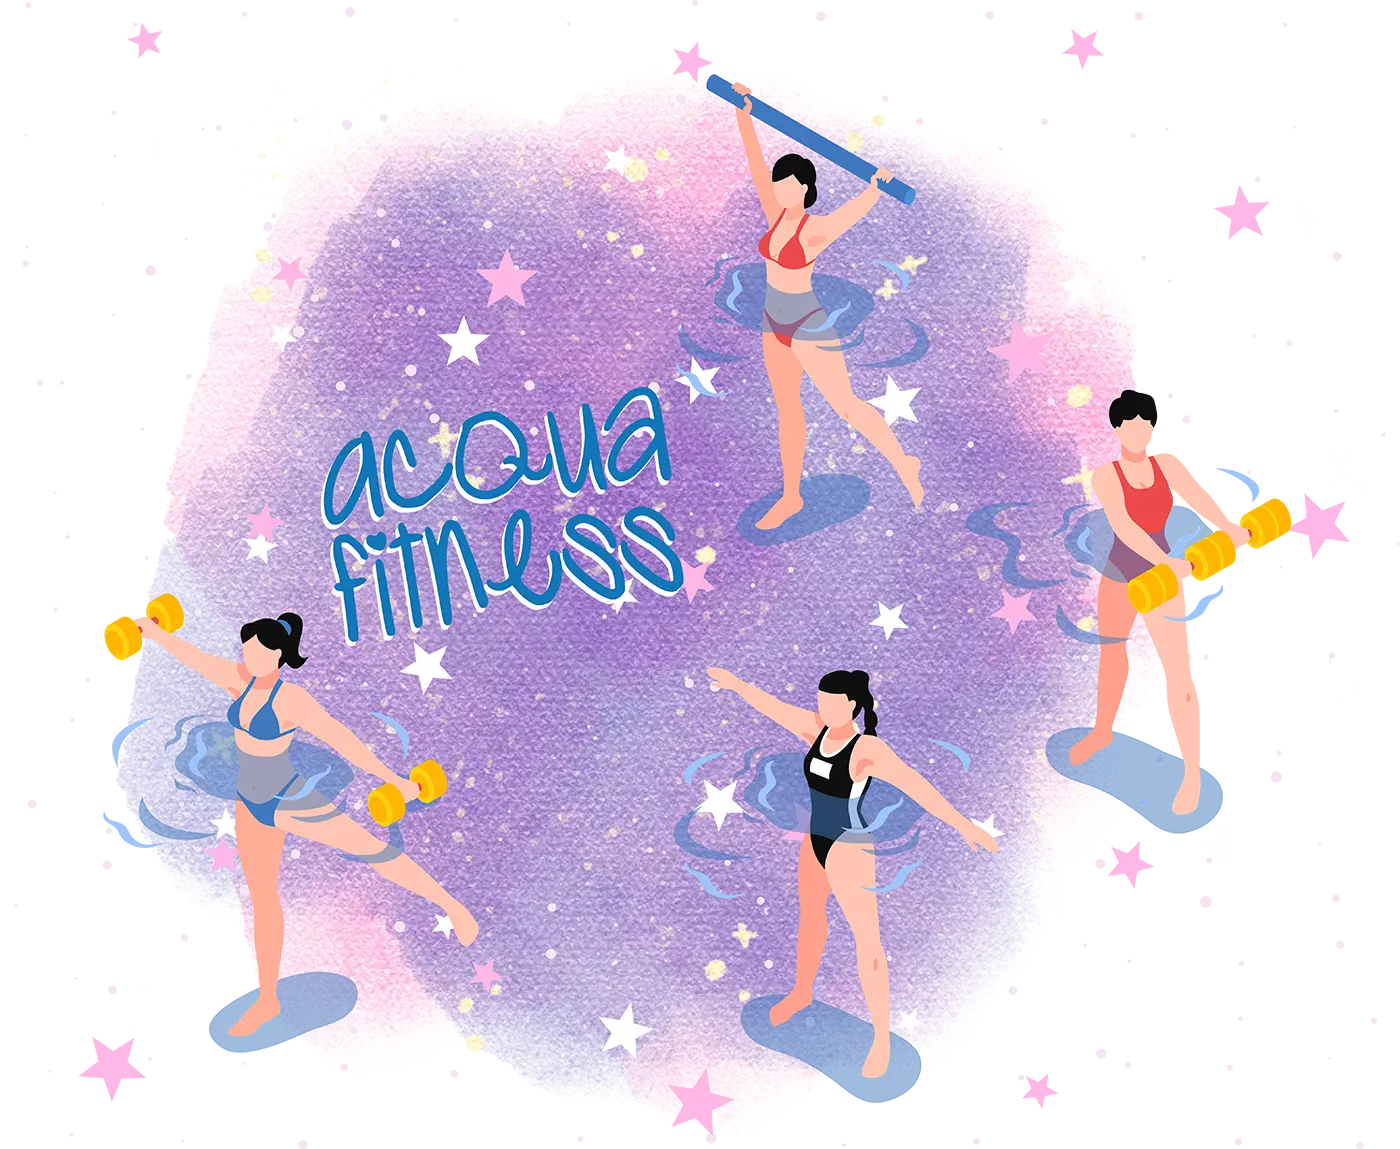 Aqua fitness